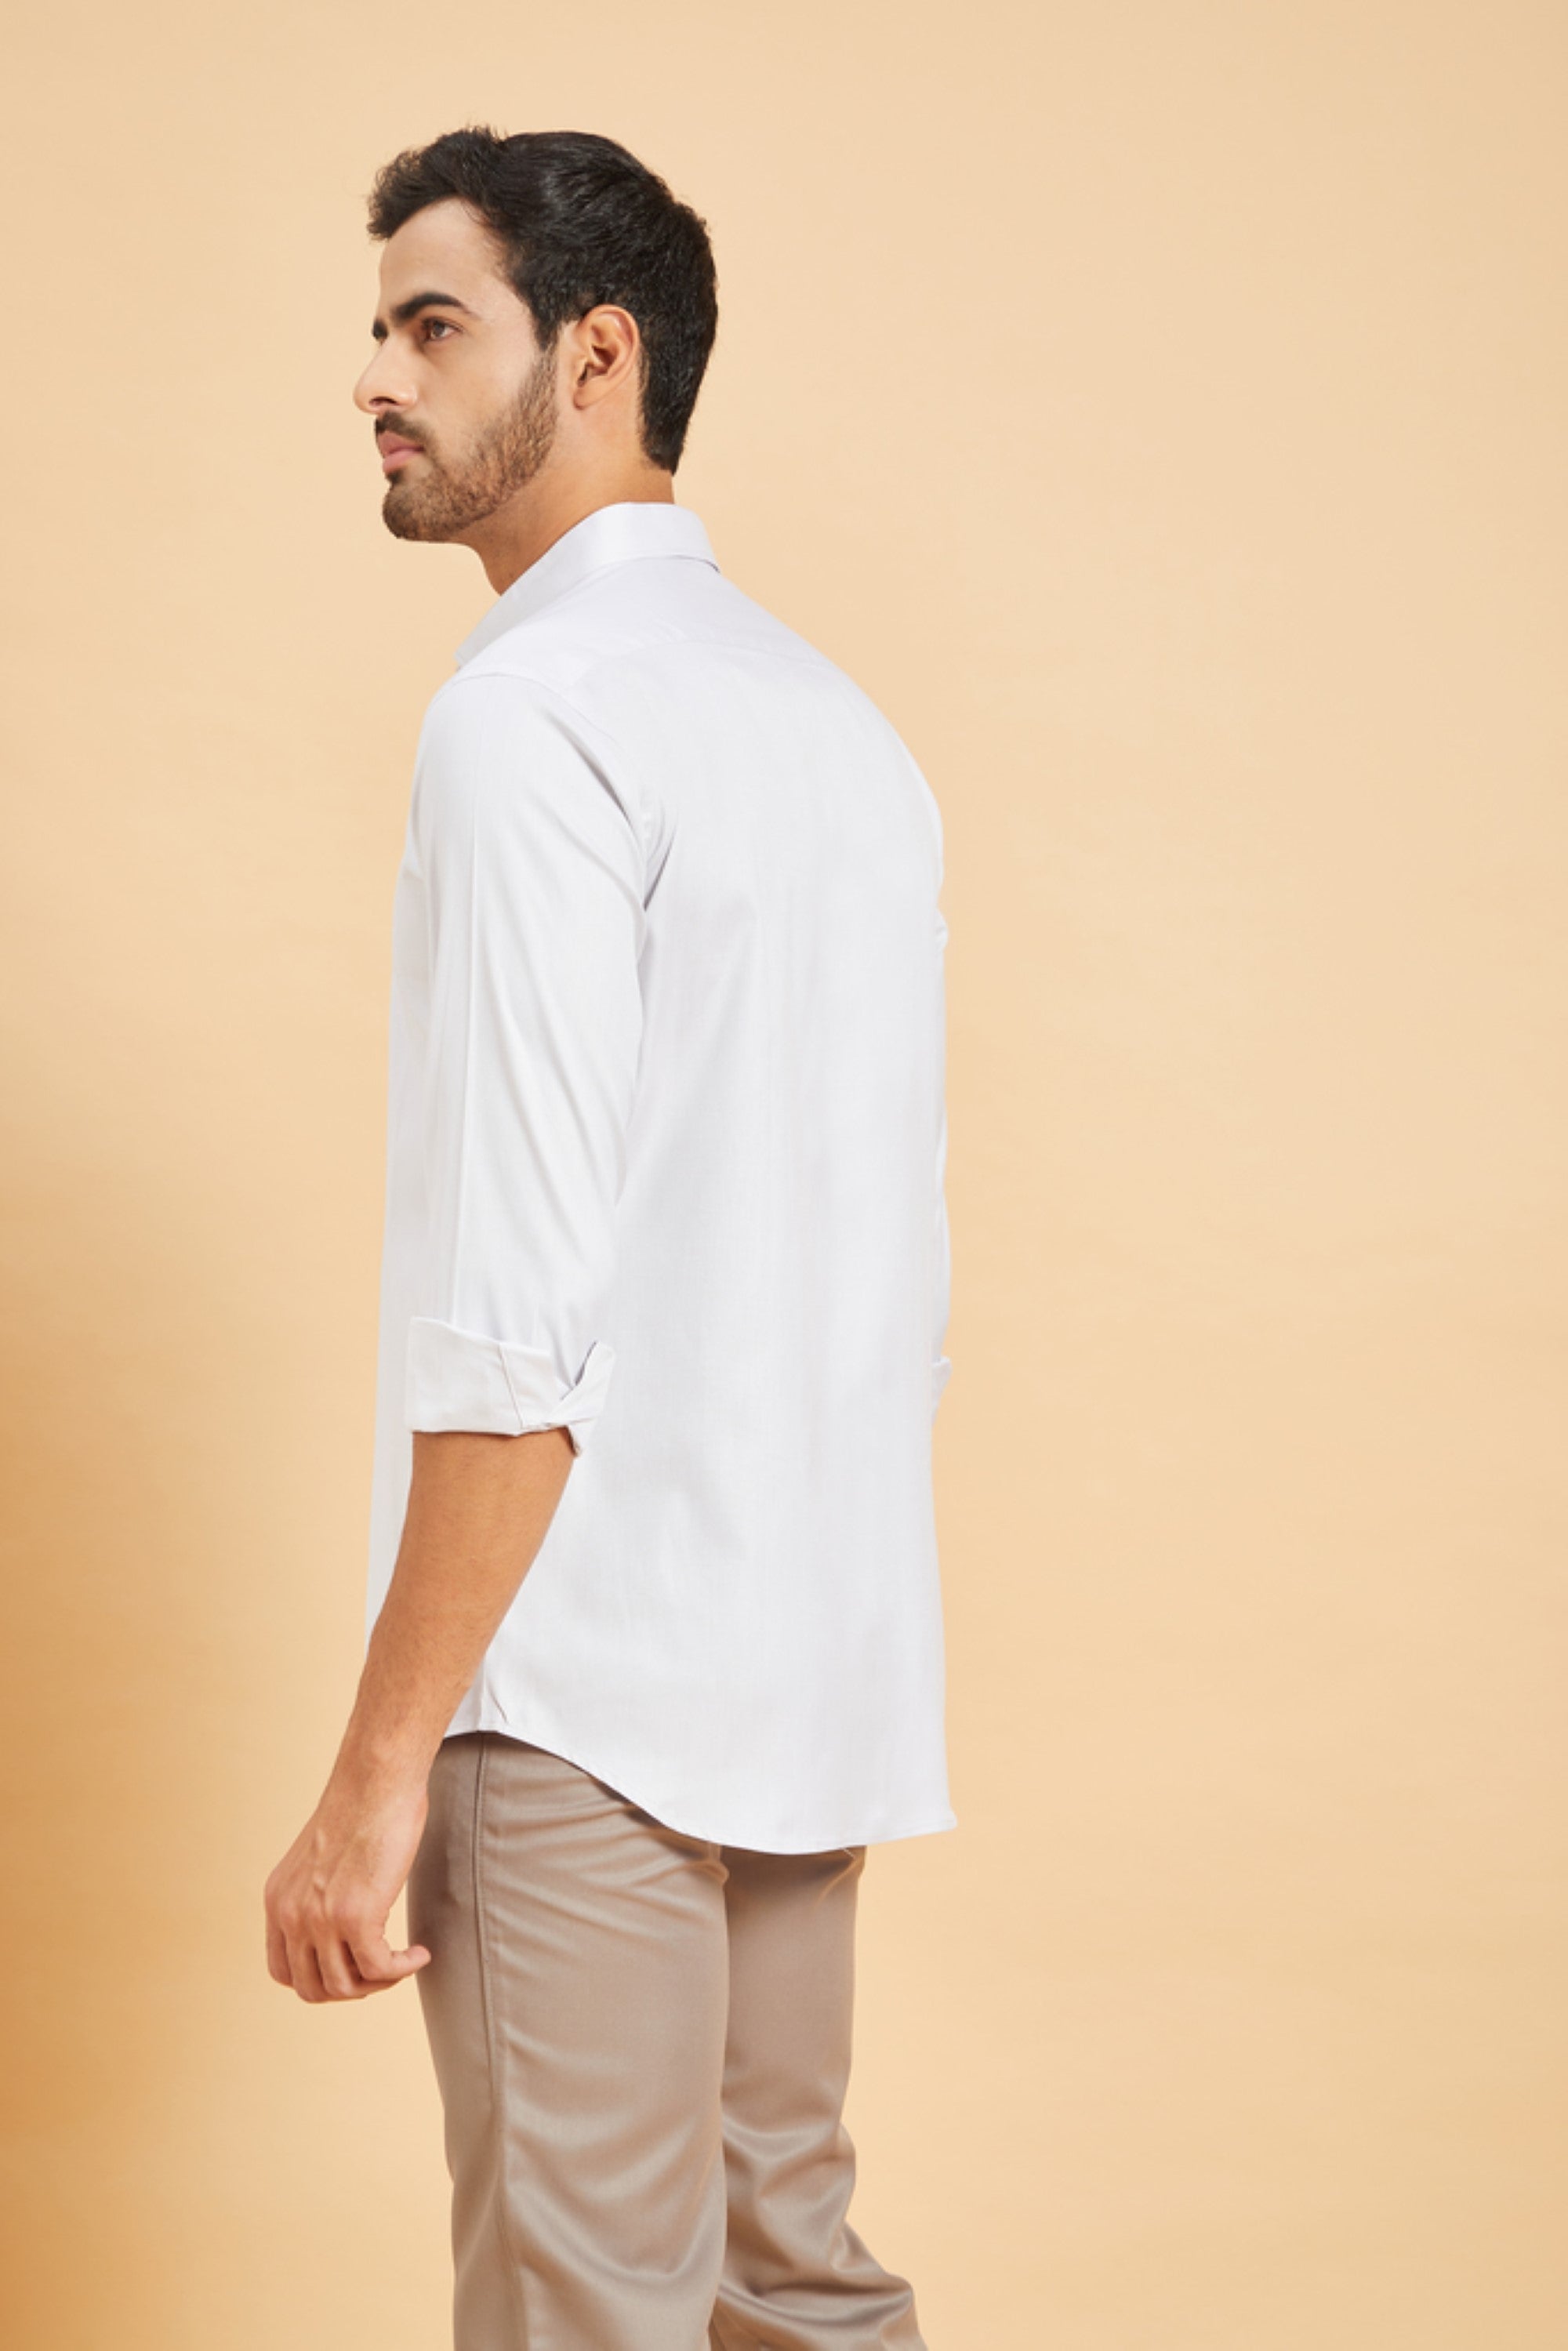 Men's Grey Color June Grey Shirt Full Sleeves Casual Shirt - Hilo Design